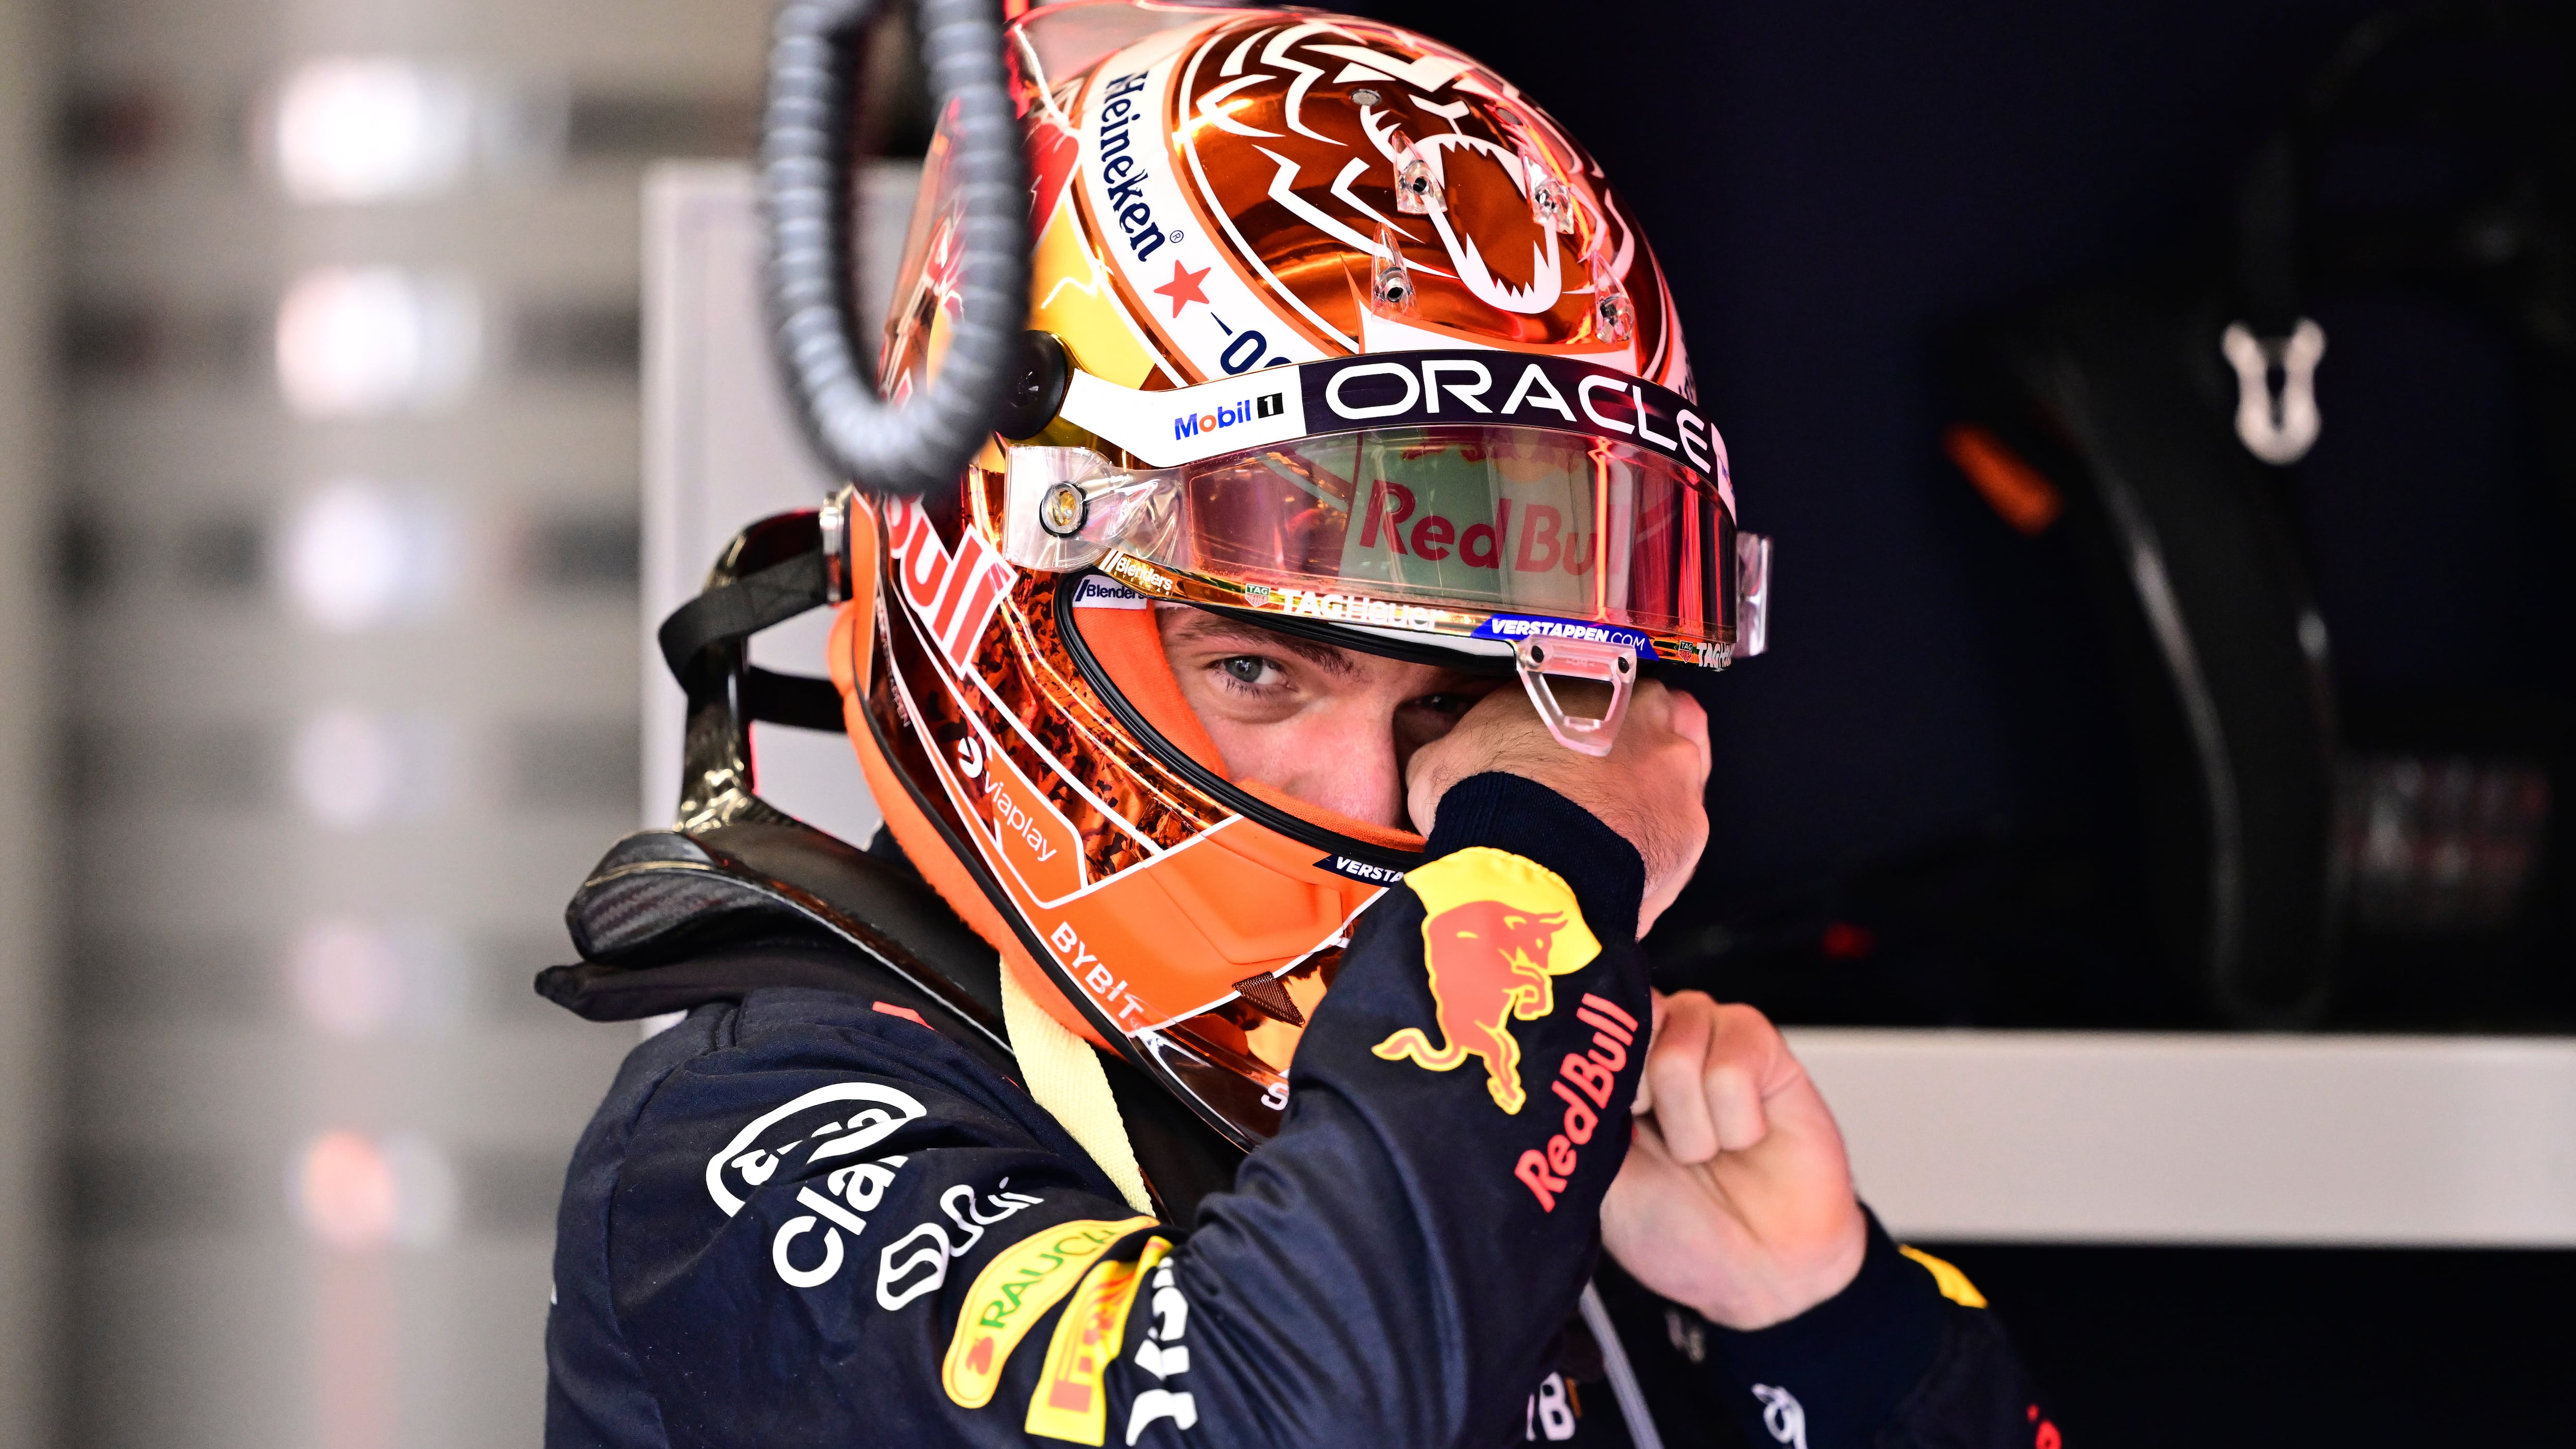 McLaren’s team principal says Formula One should impose harsher sanctions on Max Verstappen (Christian Bruna/AP)